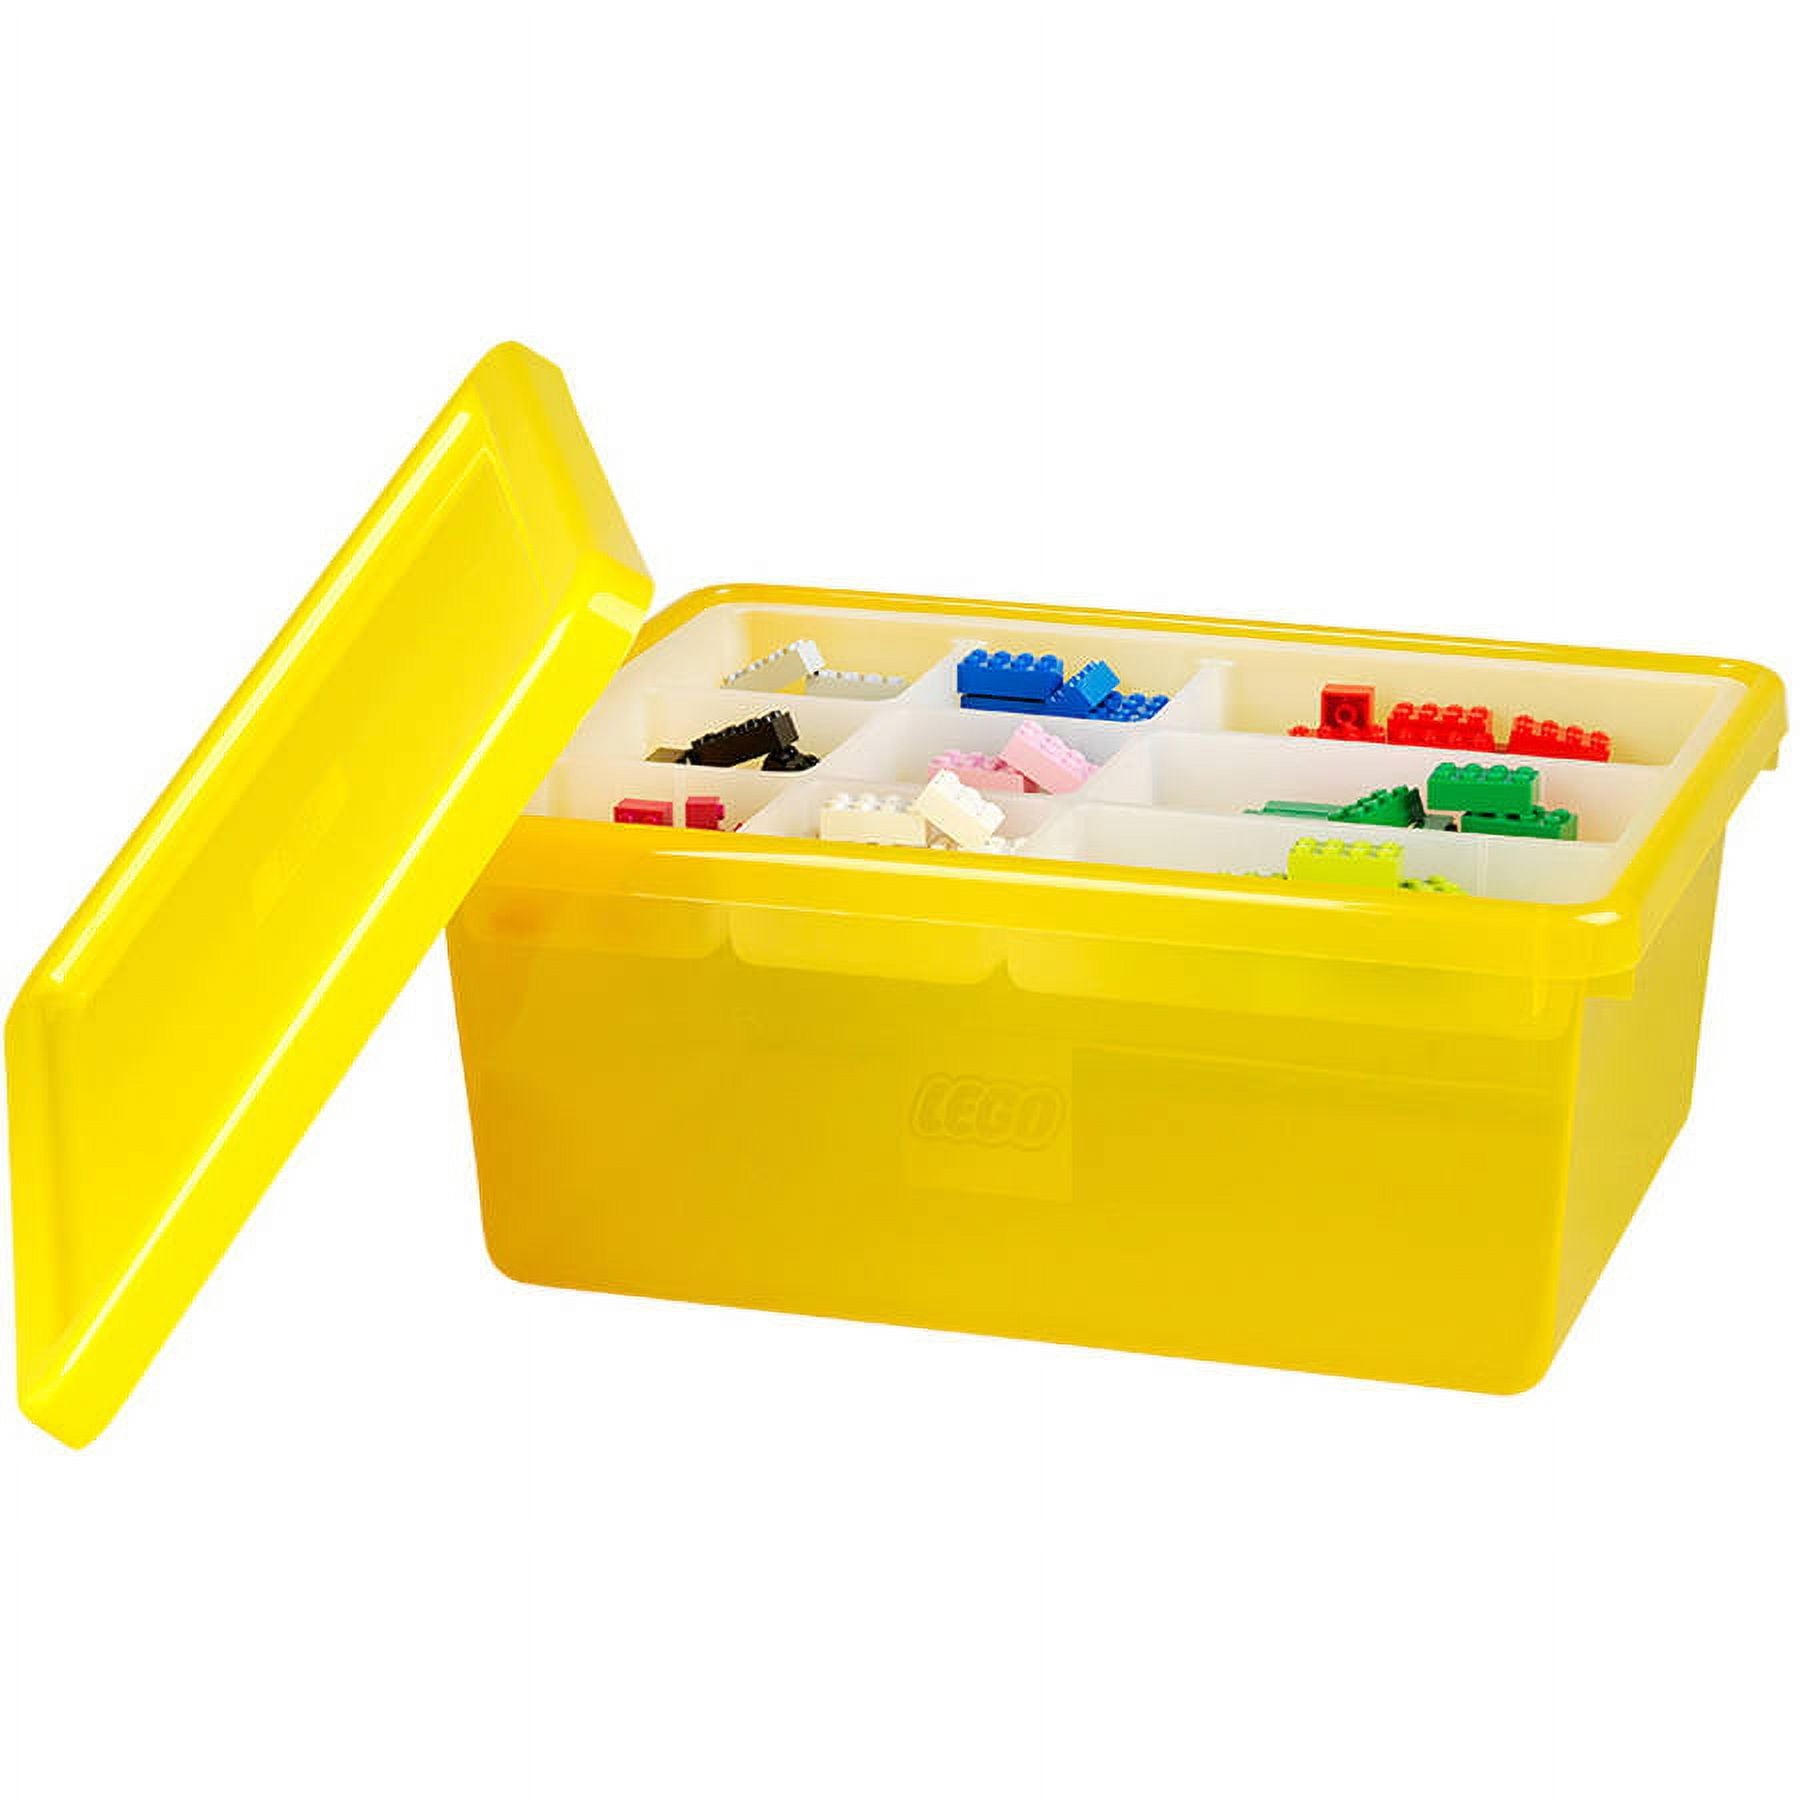 LEGO Storage Box Medium with Lid, Yellow